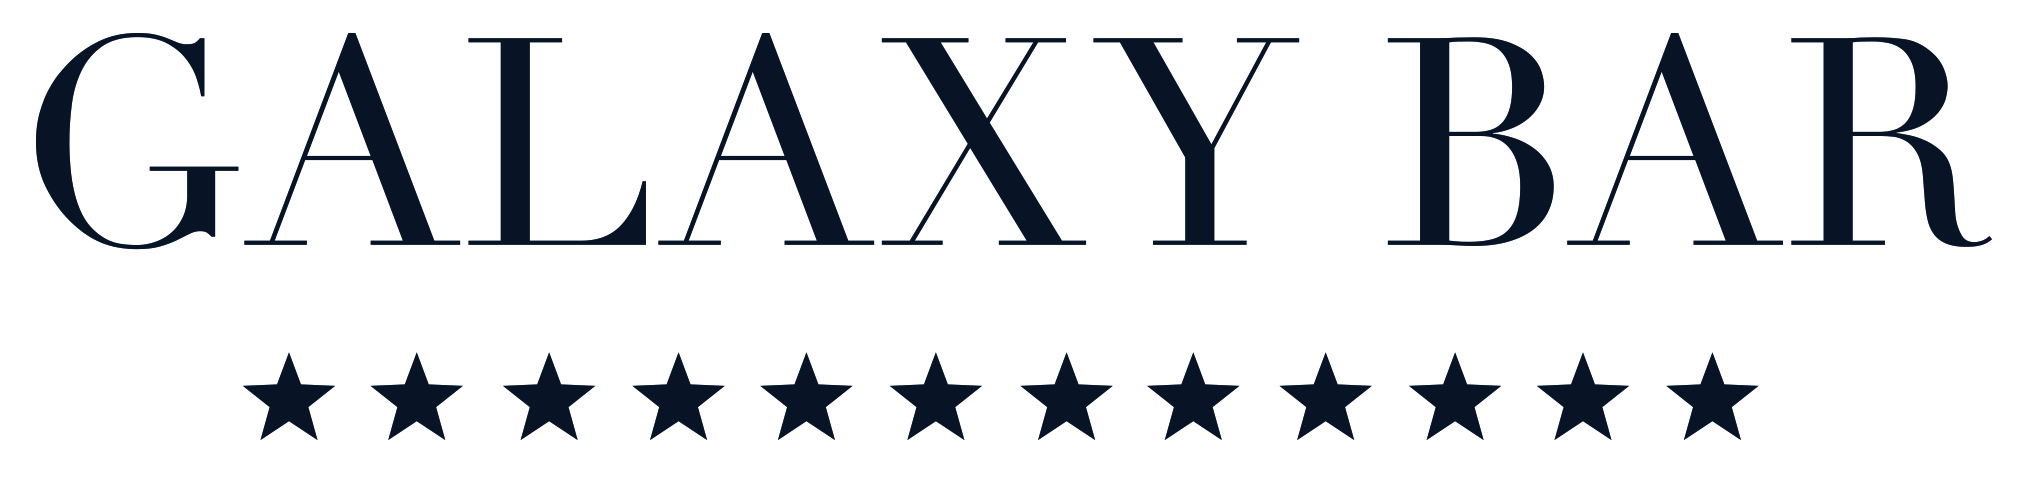 galaxy bar logo with 12 stars.ai BLUE.jpg